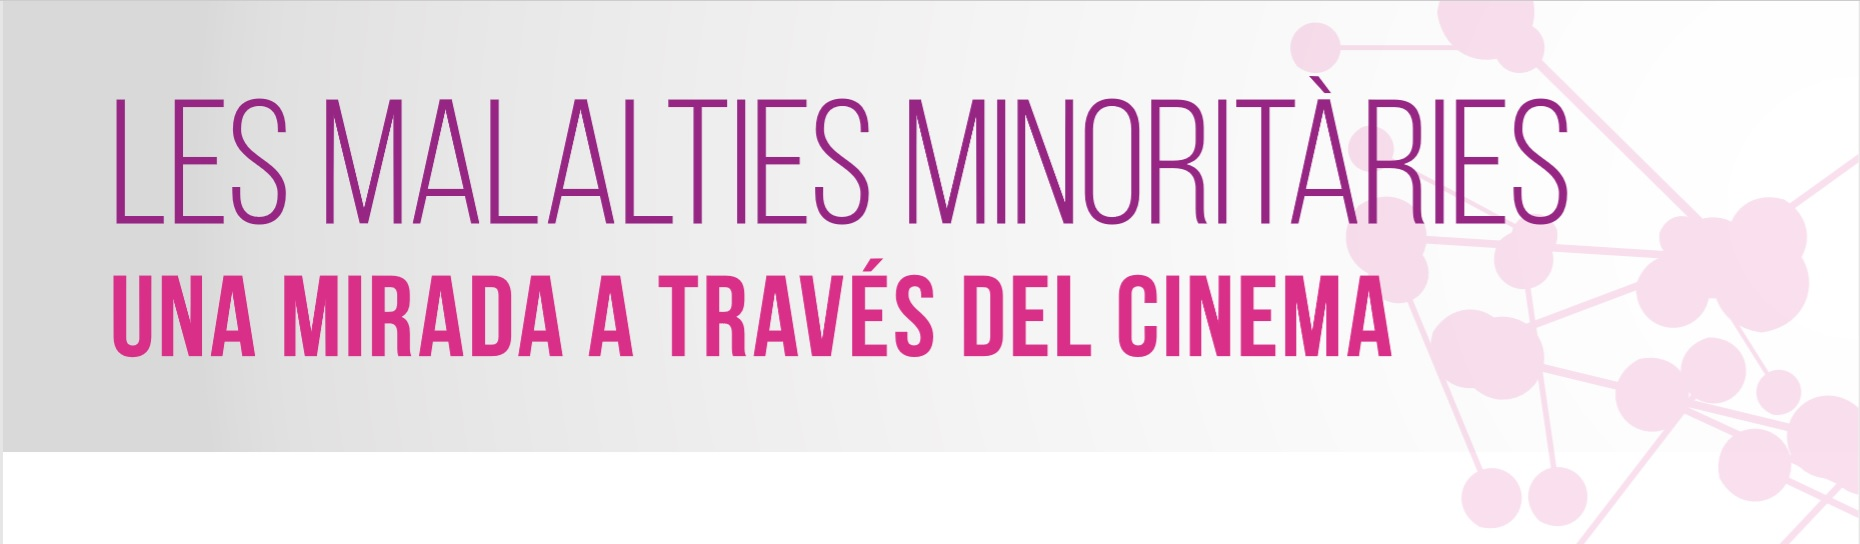 imagen anunciando la jornada CineFòrum  "Les Malalties Minoritàries, una mirada a través del Cinema"